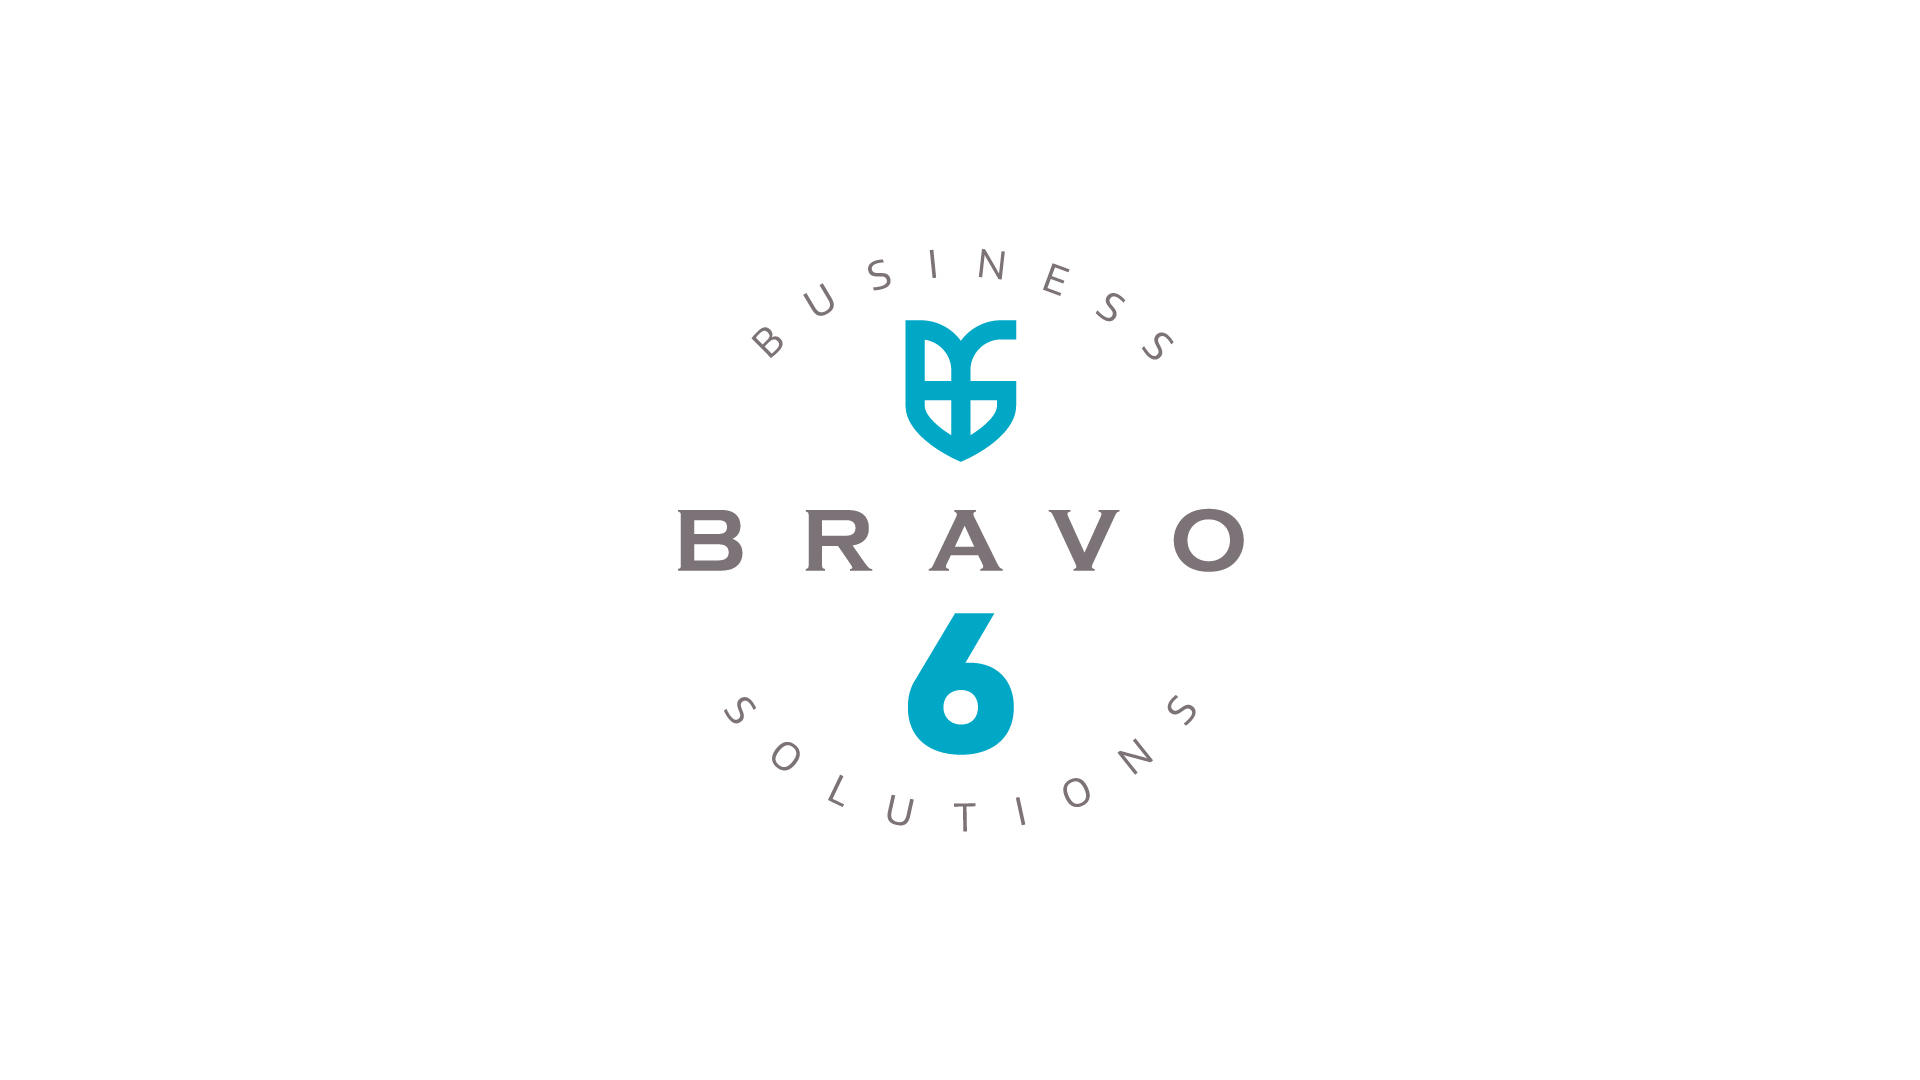 Bravo 6